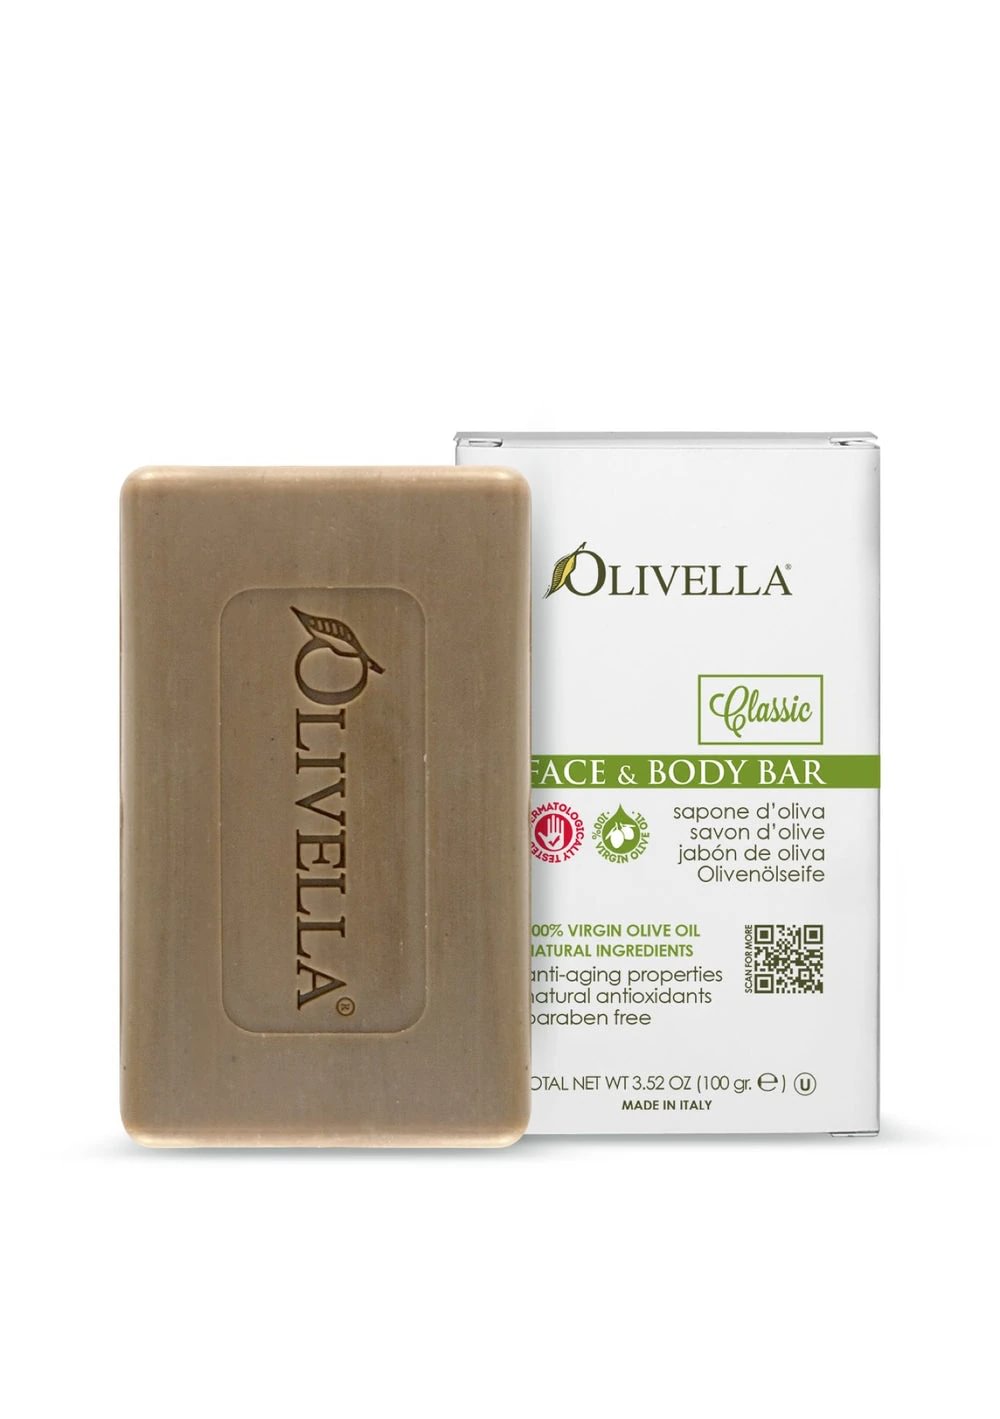 Olivella Classic face & body bar, 100g